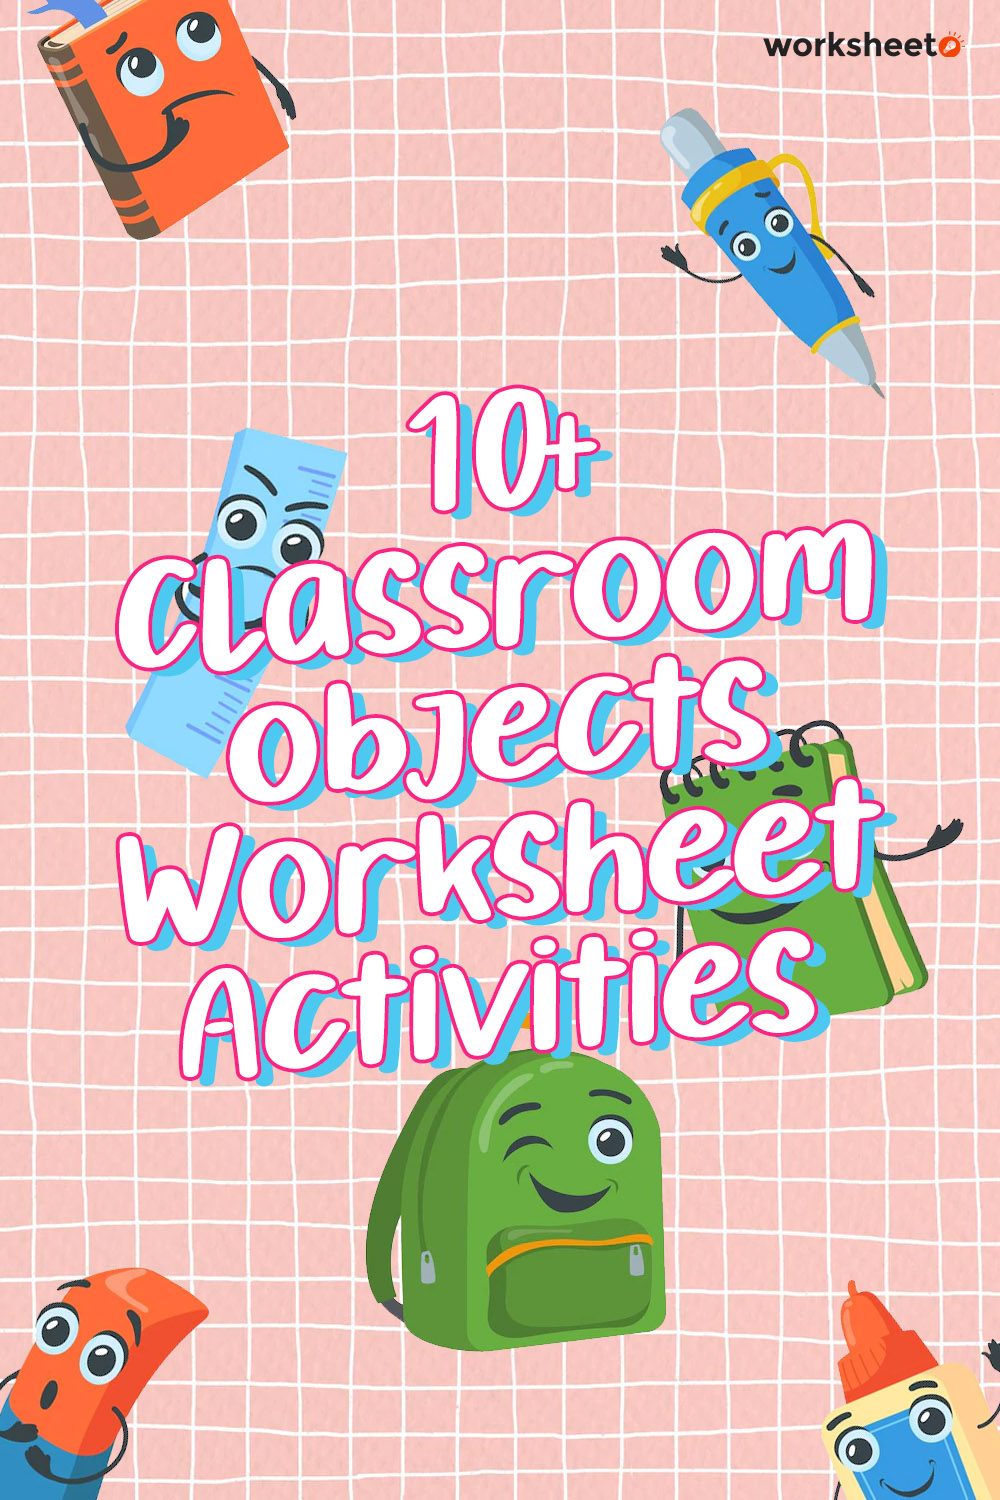 Classroom Objects Worksheet Activities